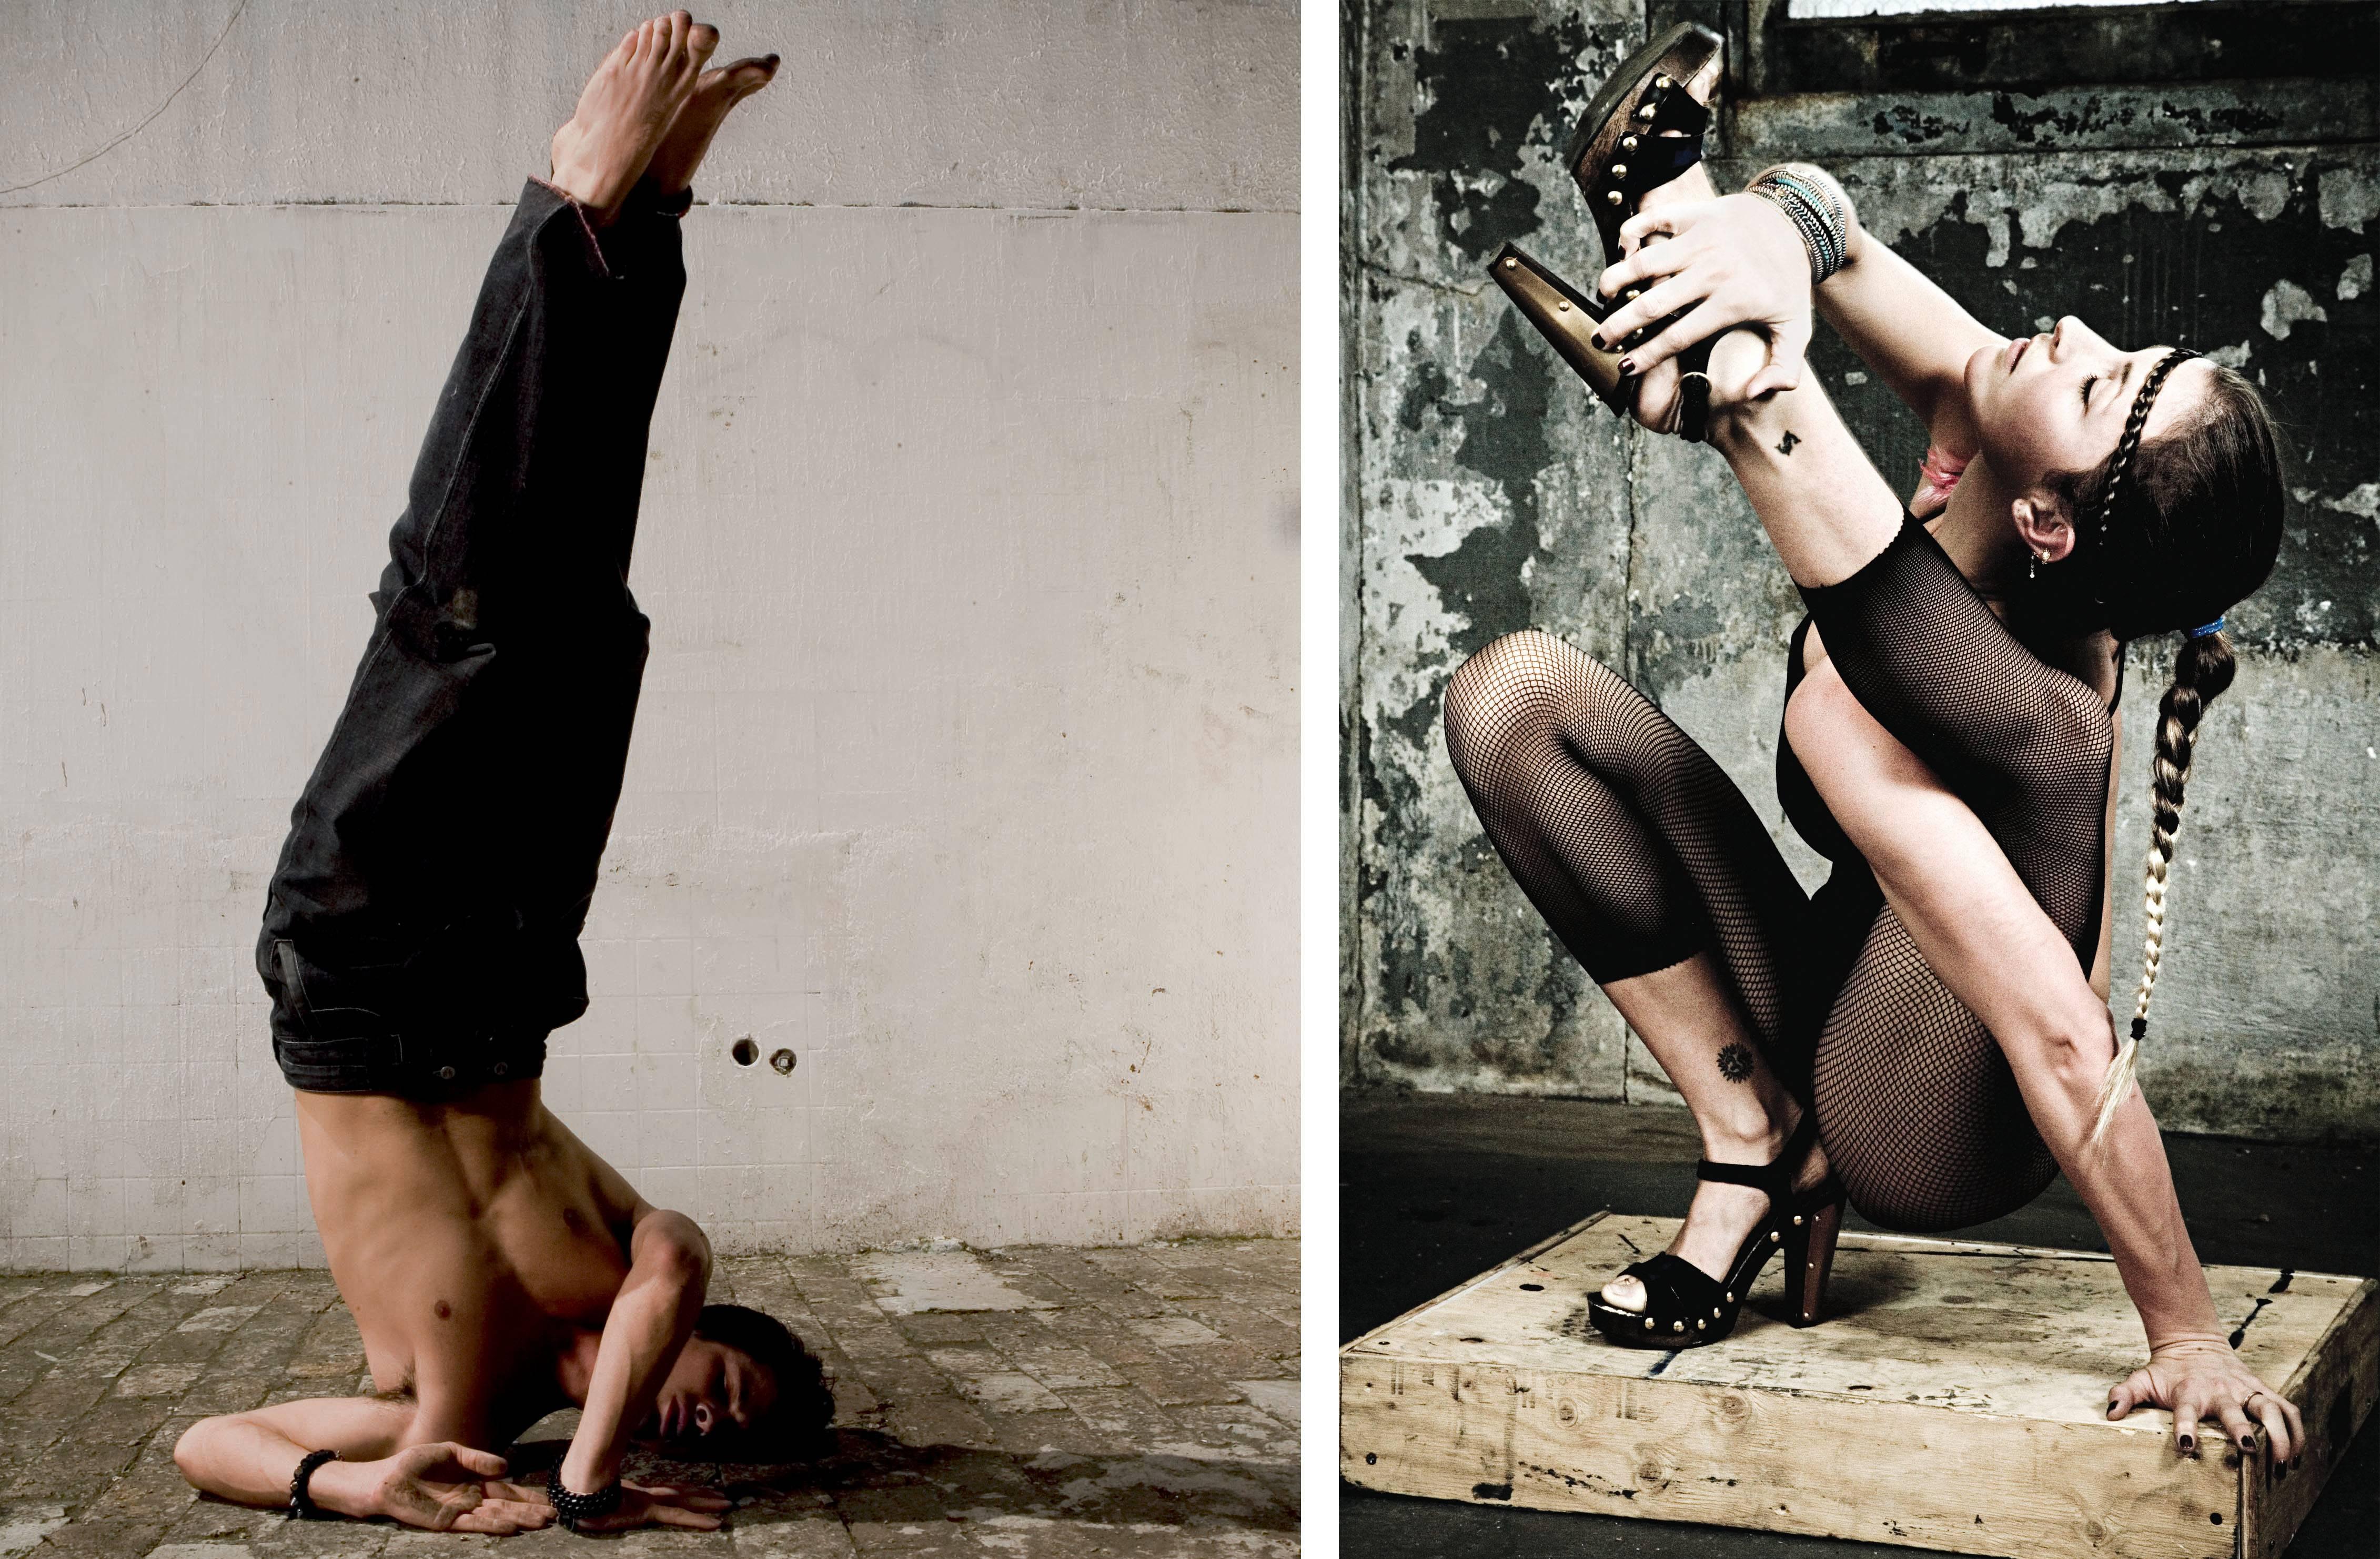 Mauricio Velez Color Photograph - Half Angels Half Demons #23 and #22 Yoga posture portraits color photographs